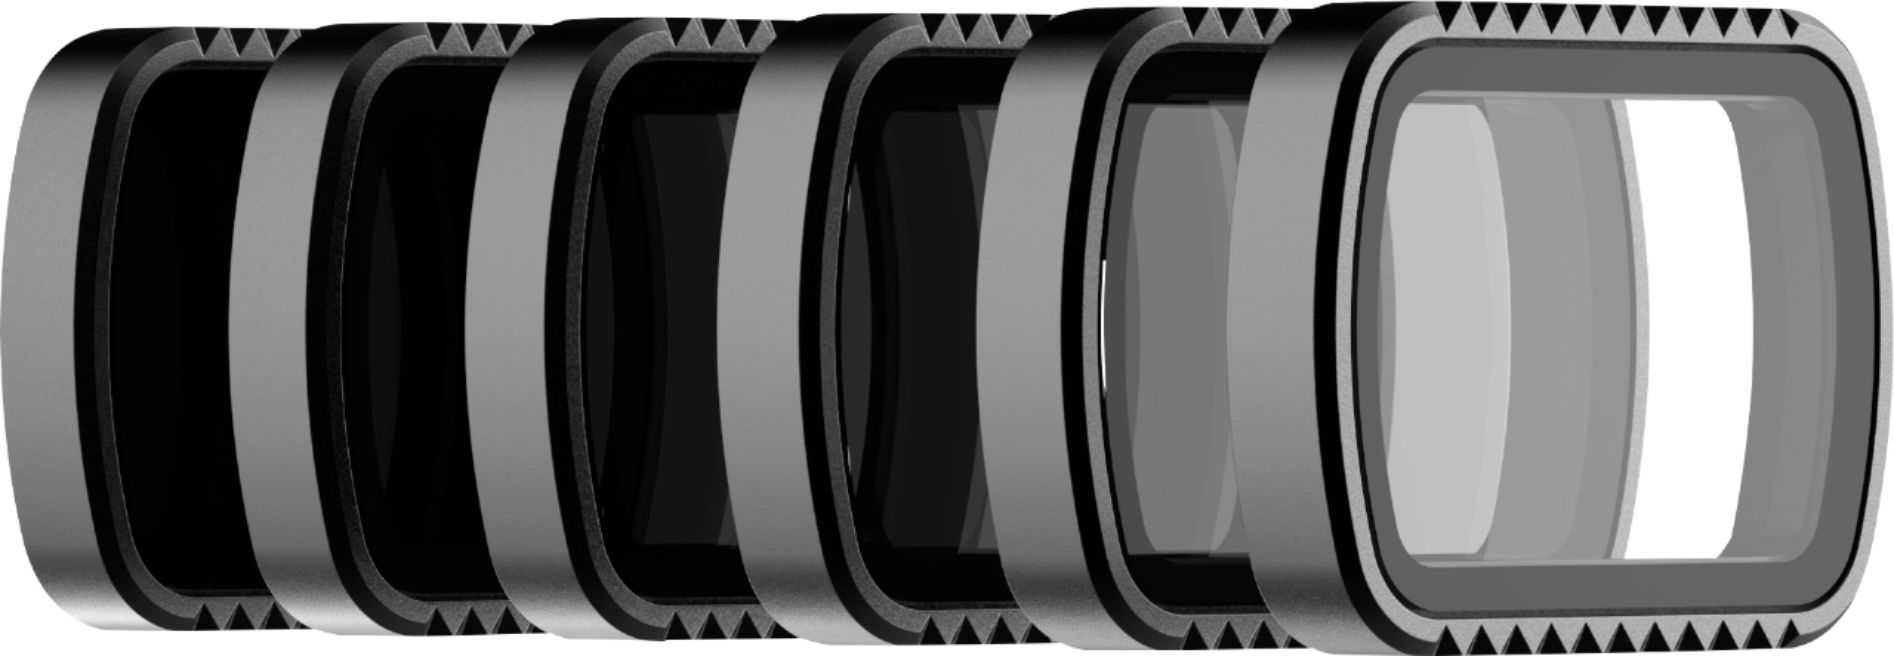 PolarPro - Standard Series Polarizer / Neutral Density Lens Filter (6-Count)